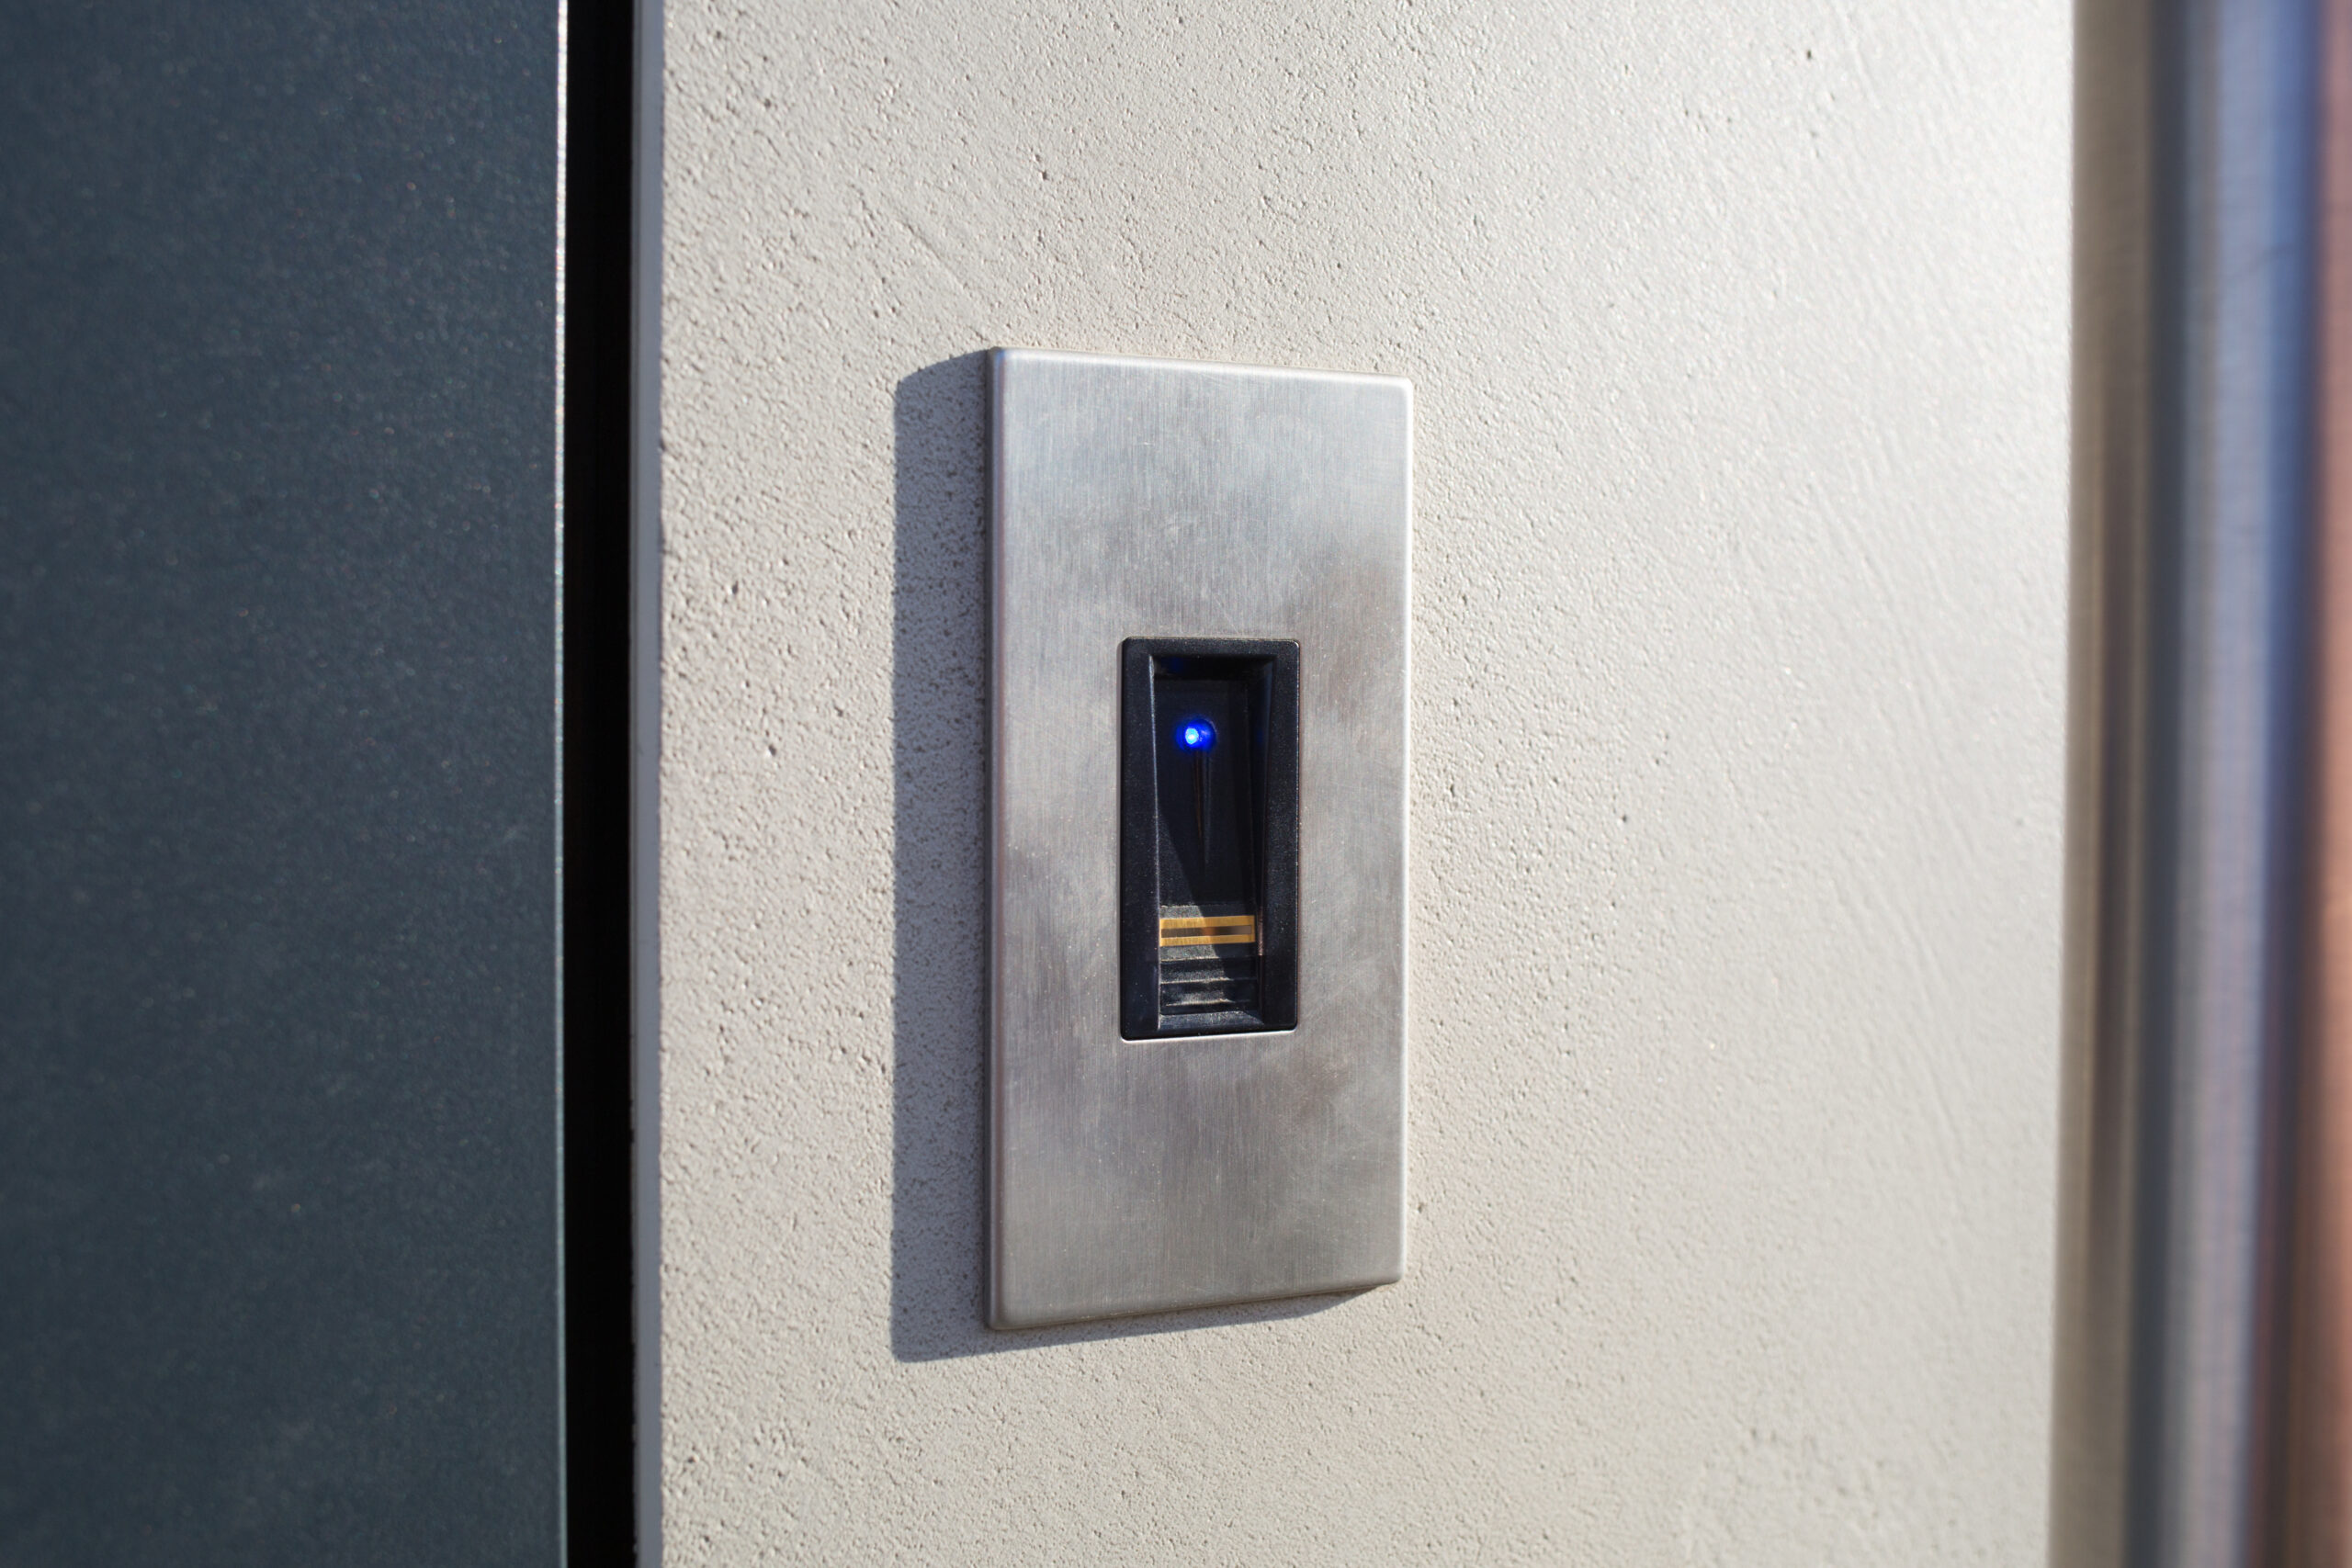 biometric lock. opening front door of house by fingerprint. modern smart digital technologies